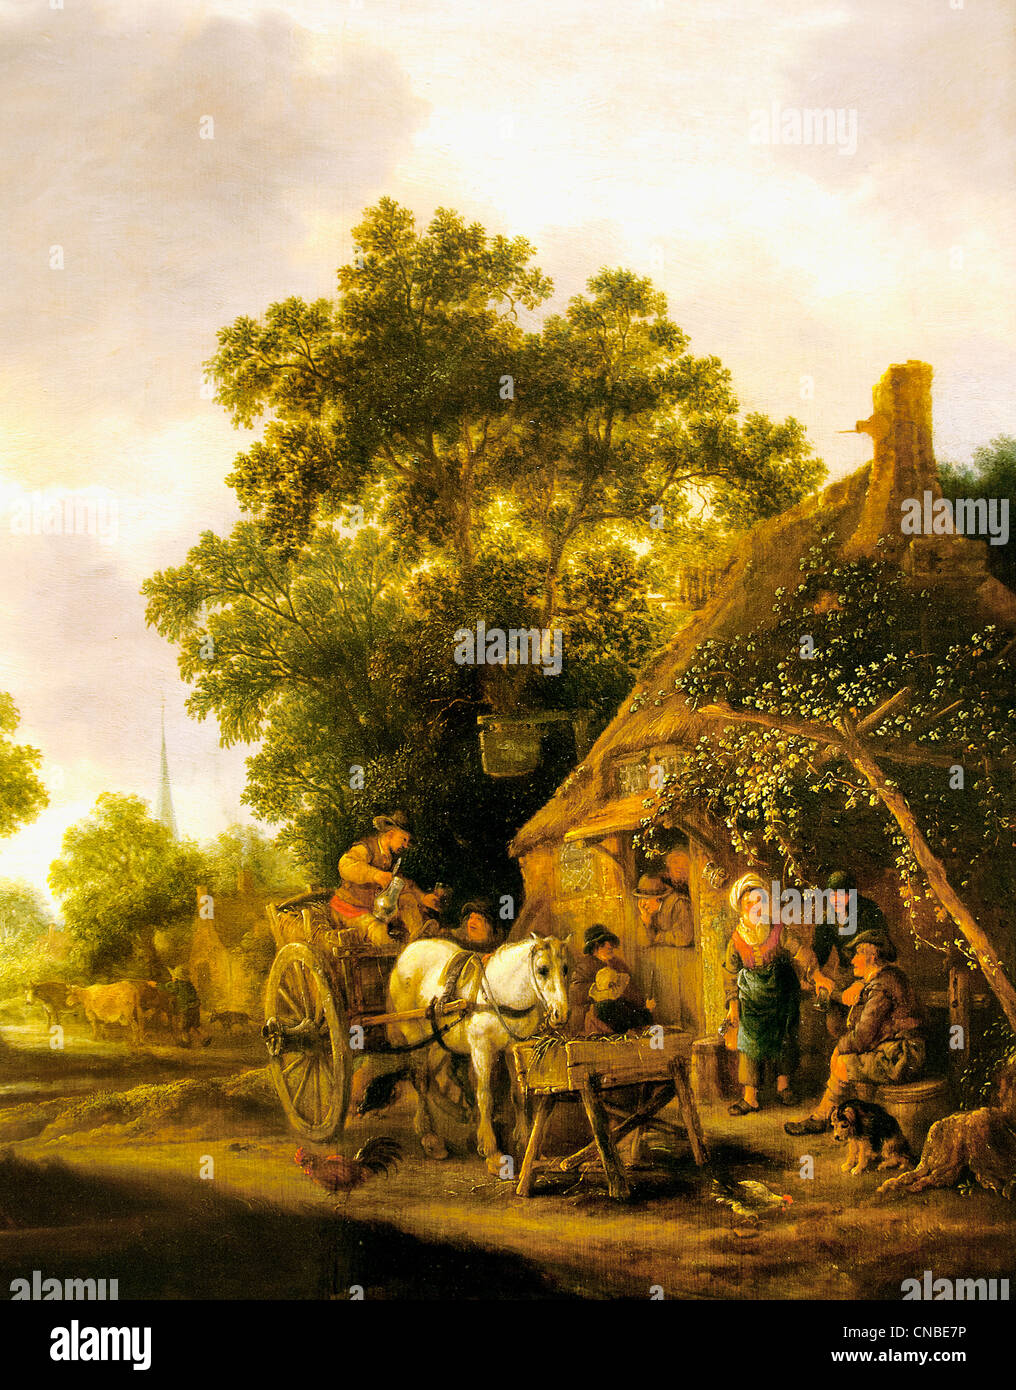 Carriole En Arrêt Devant Une Taverne - hielt Schlitten vor einer Taverne Isaack van OSTADE 1621 1649 Niederlande Niederlande Stockfoto